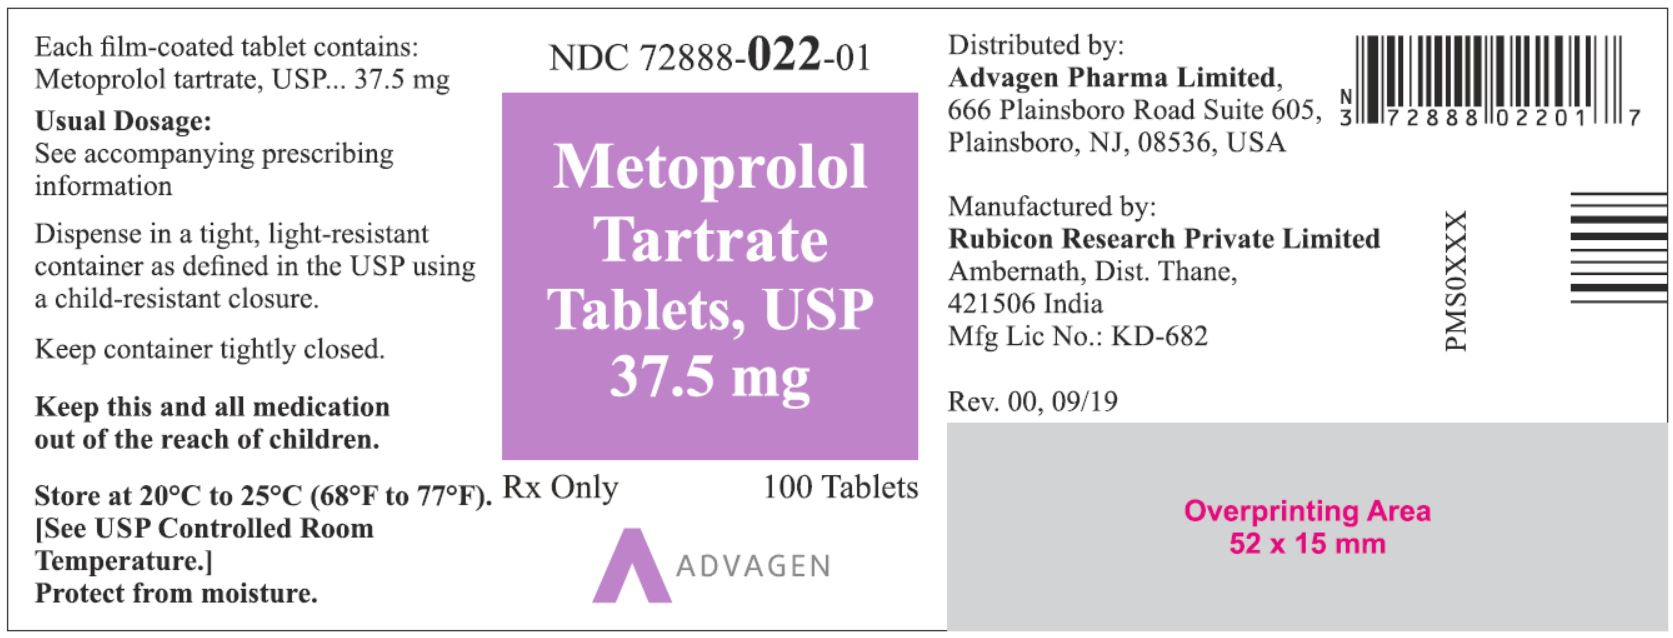 NDC: <a href=/NDC/72888-022-01>72888-022-01</a> - Metoprolol Tartrate Tablets, USP 37.5 mg - 100 Tablets